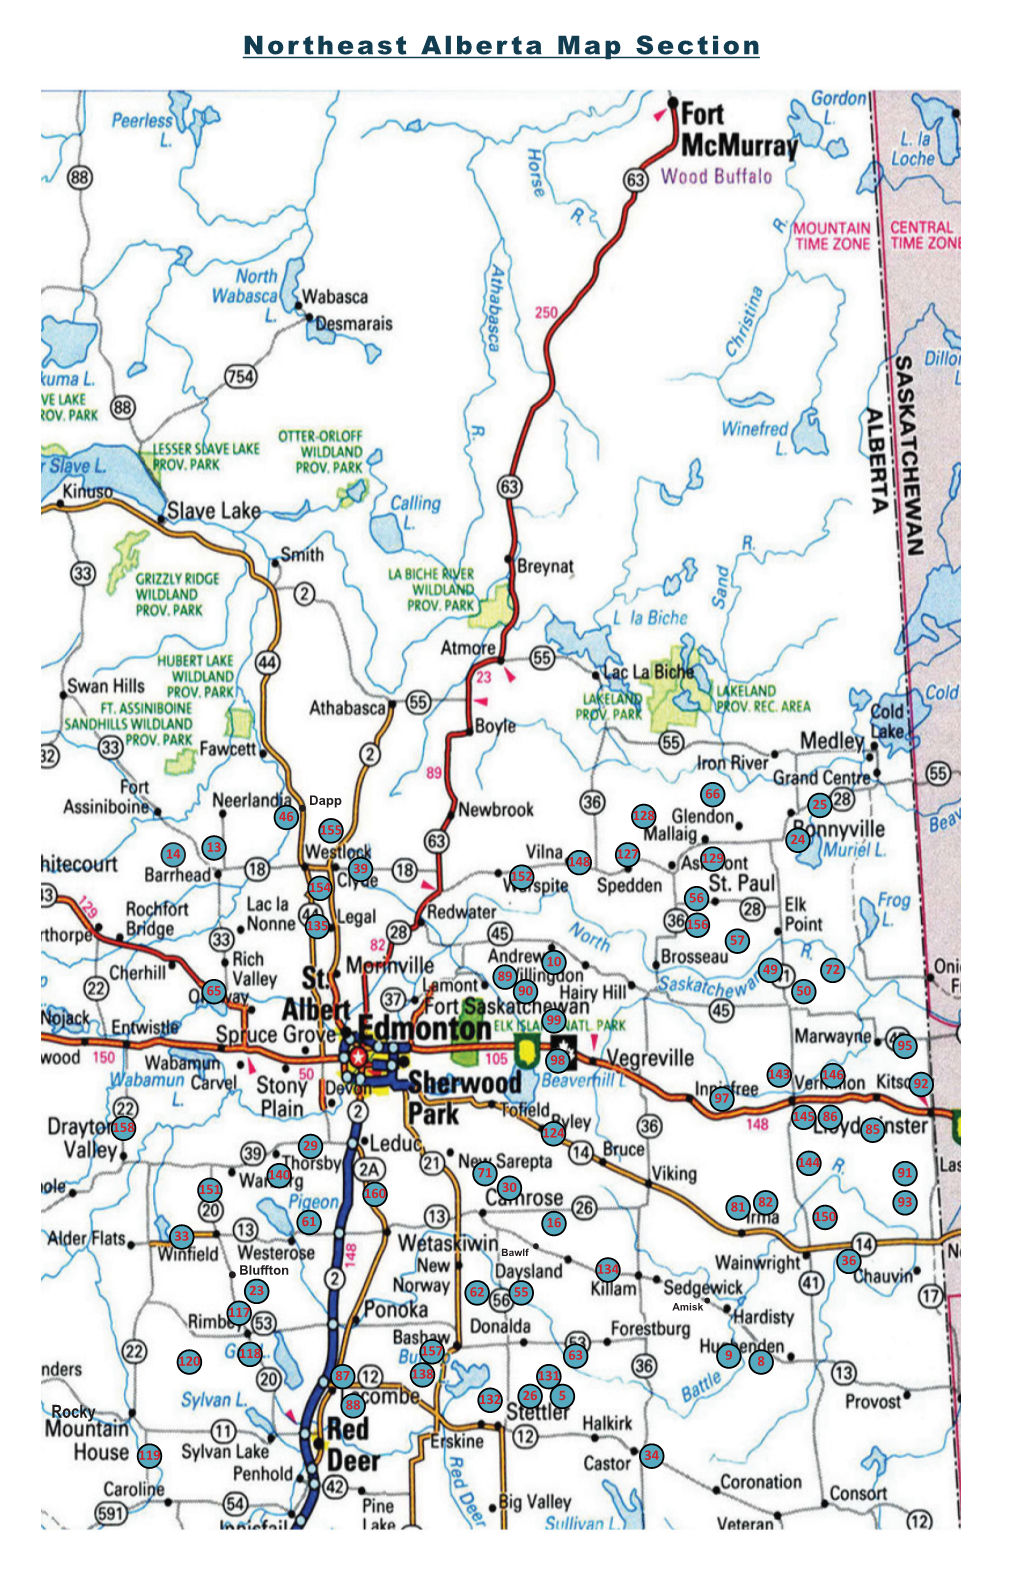 Northeast Alberta Map Section